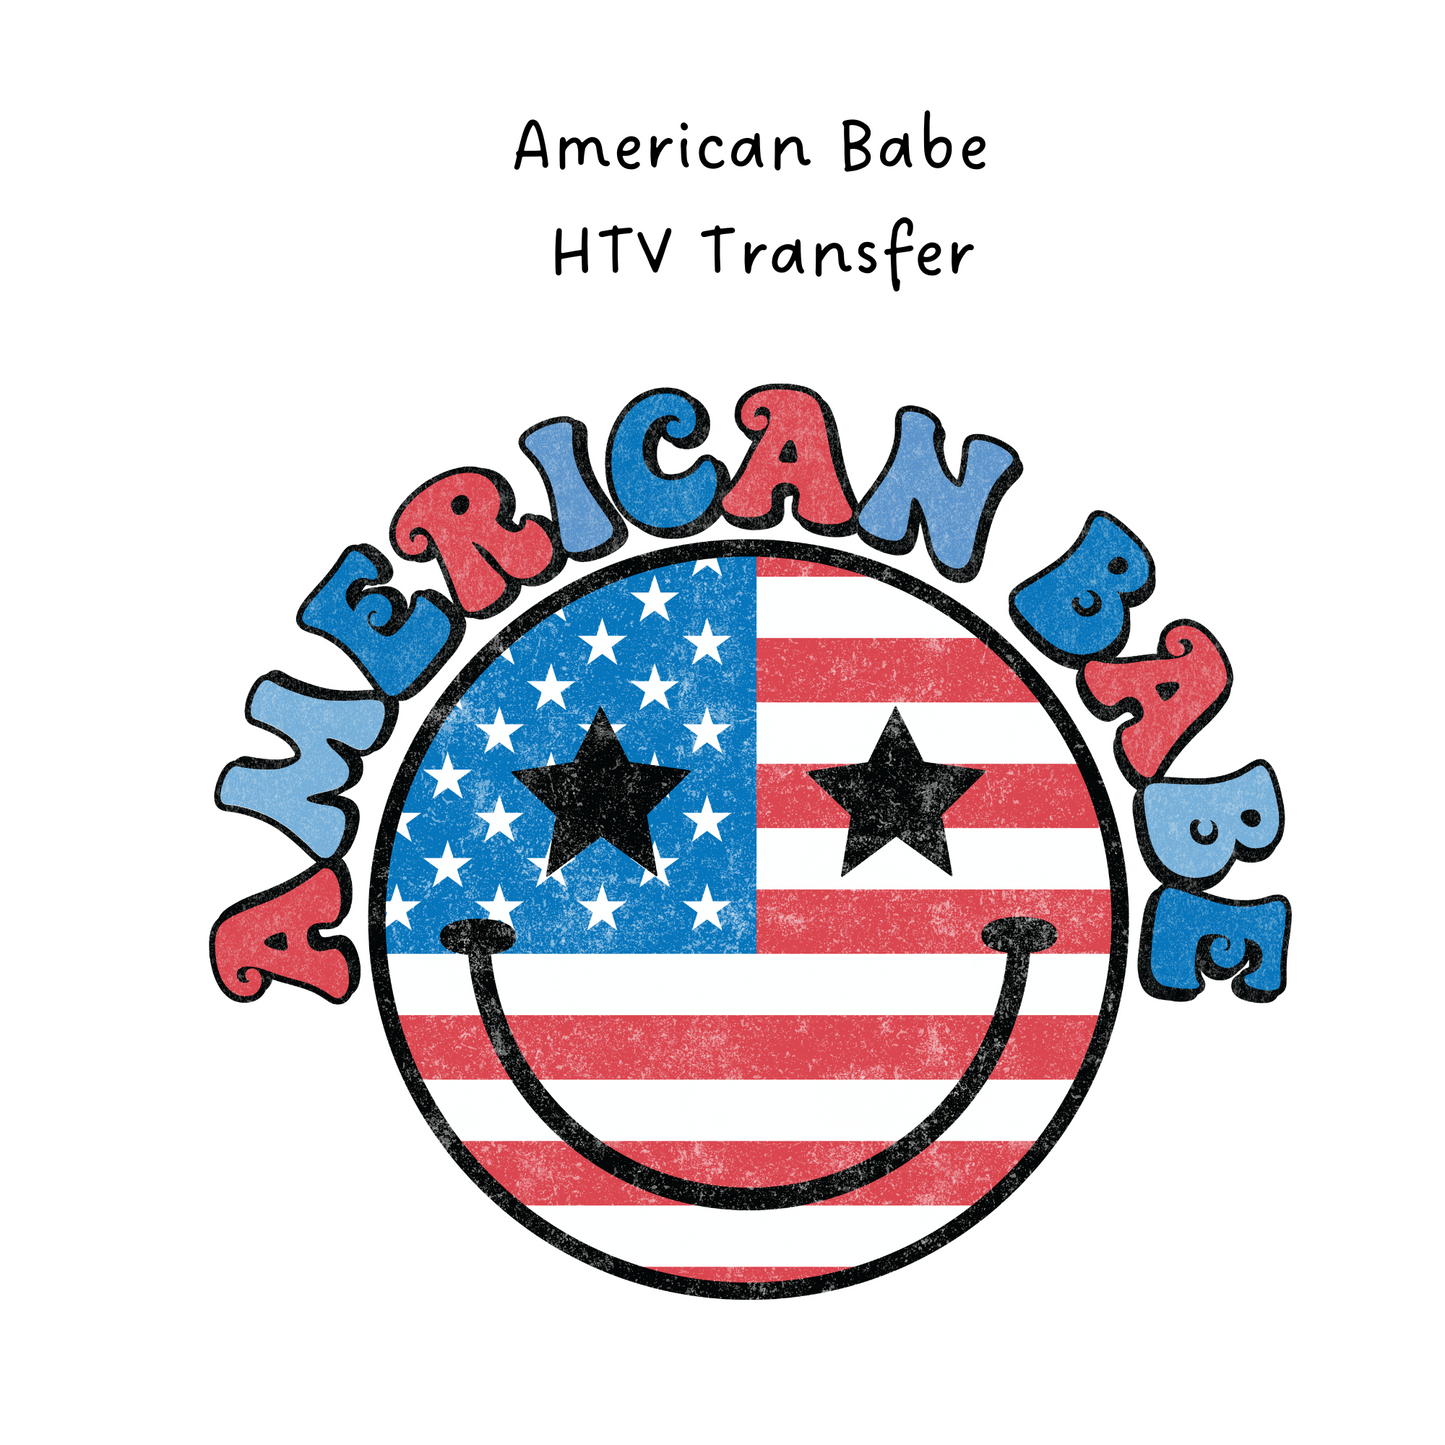 American Babe HTV Transfer